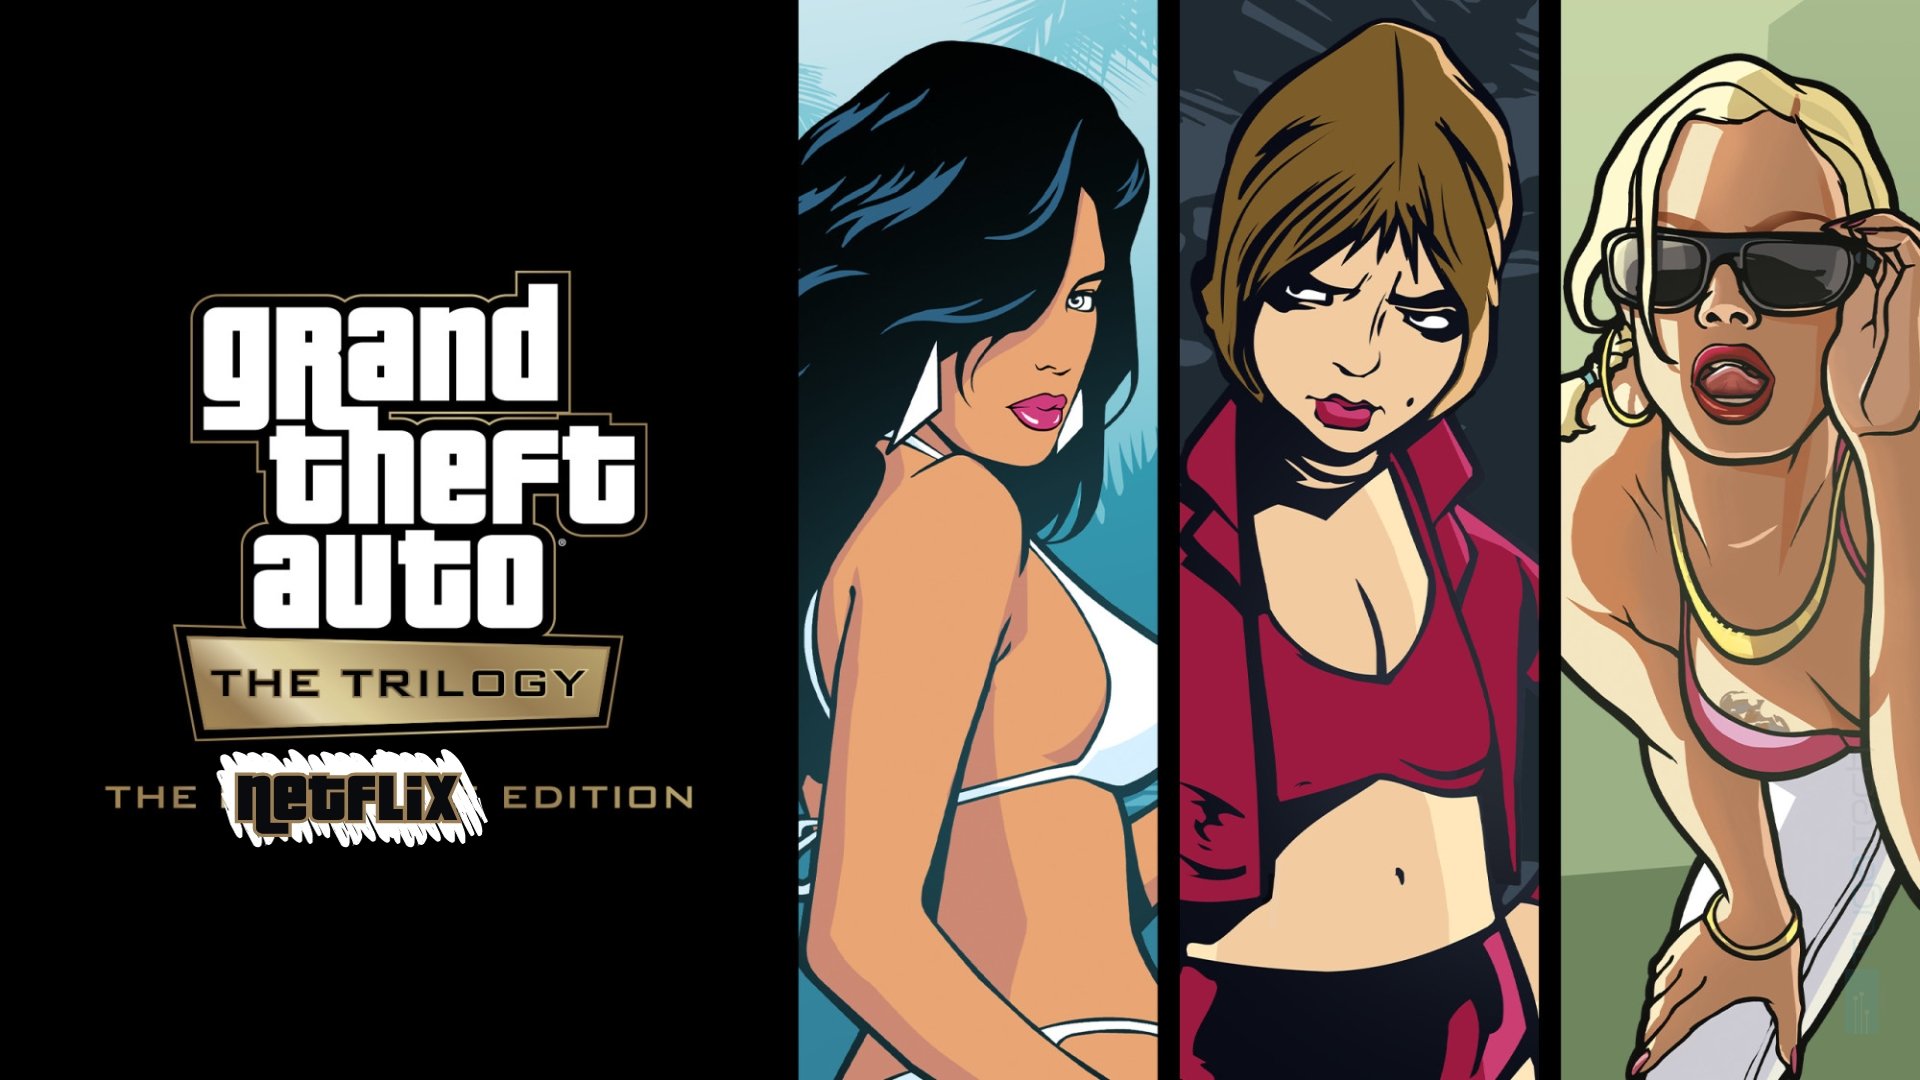 The Grand Theft Auto Trilogy - netflixEdition